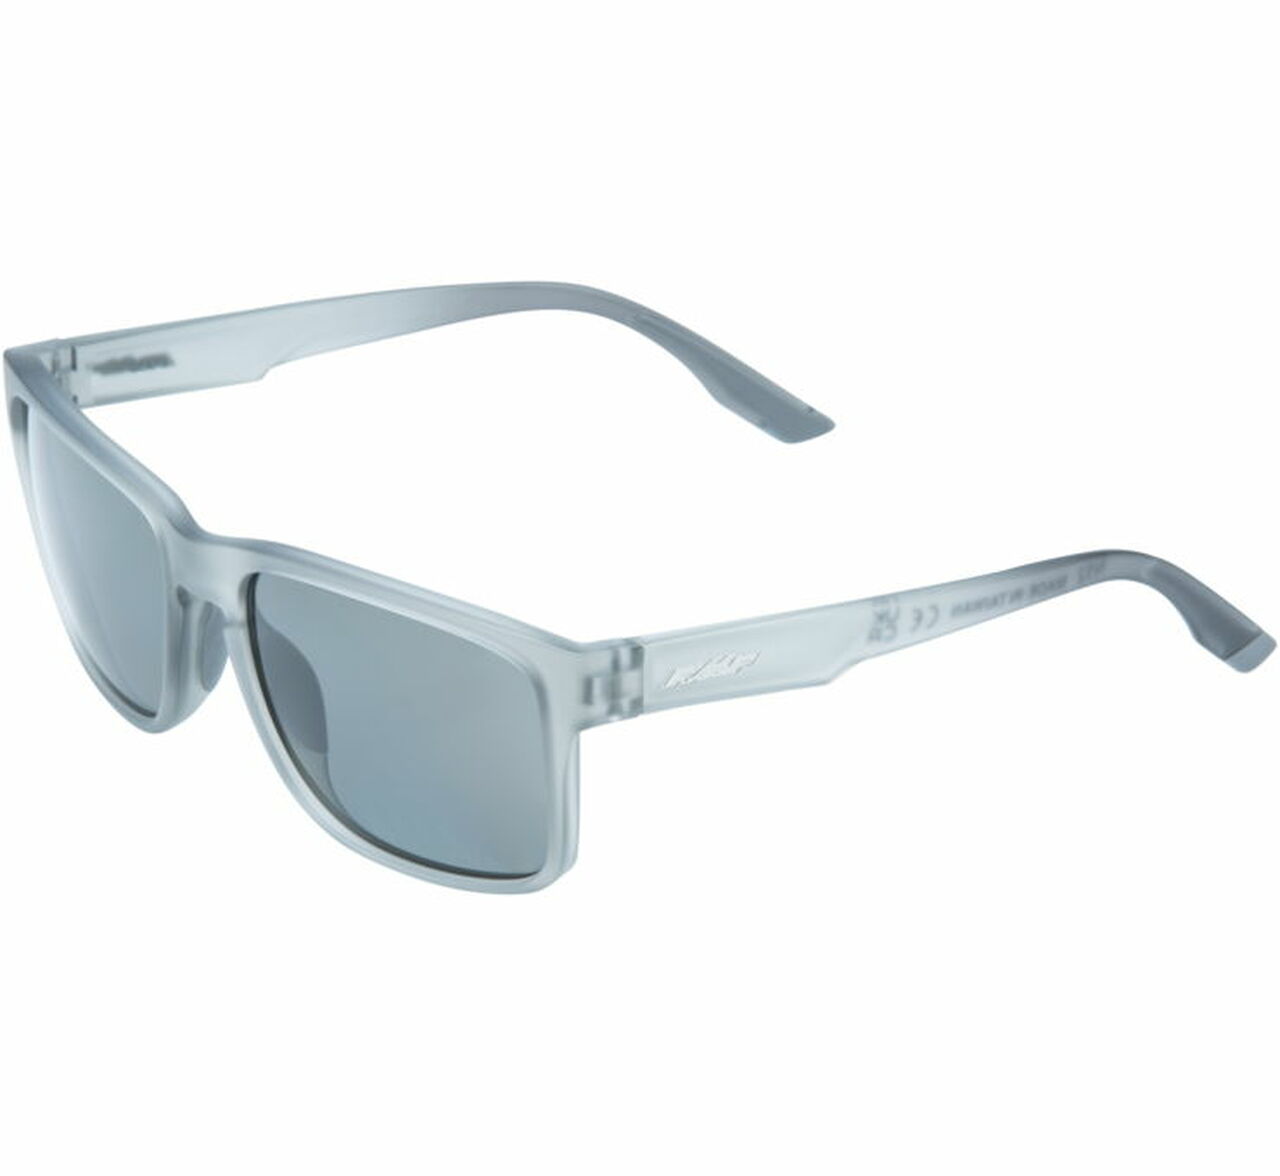 FMF Gears Sunglasses - Matte Crystal Smoke - Silver Mirror - EMD Online